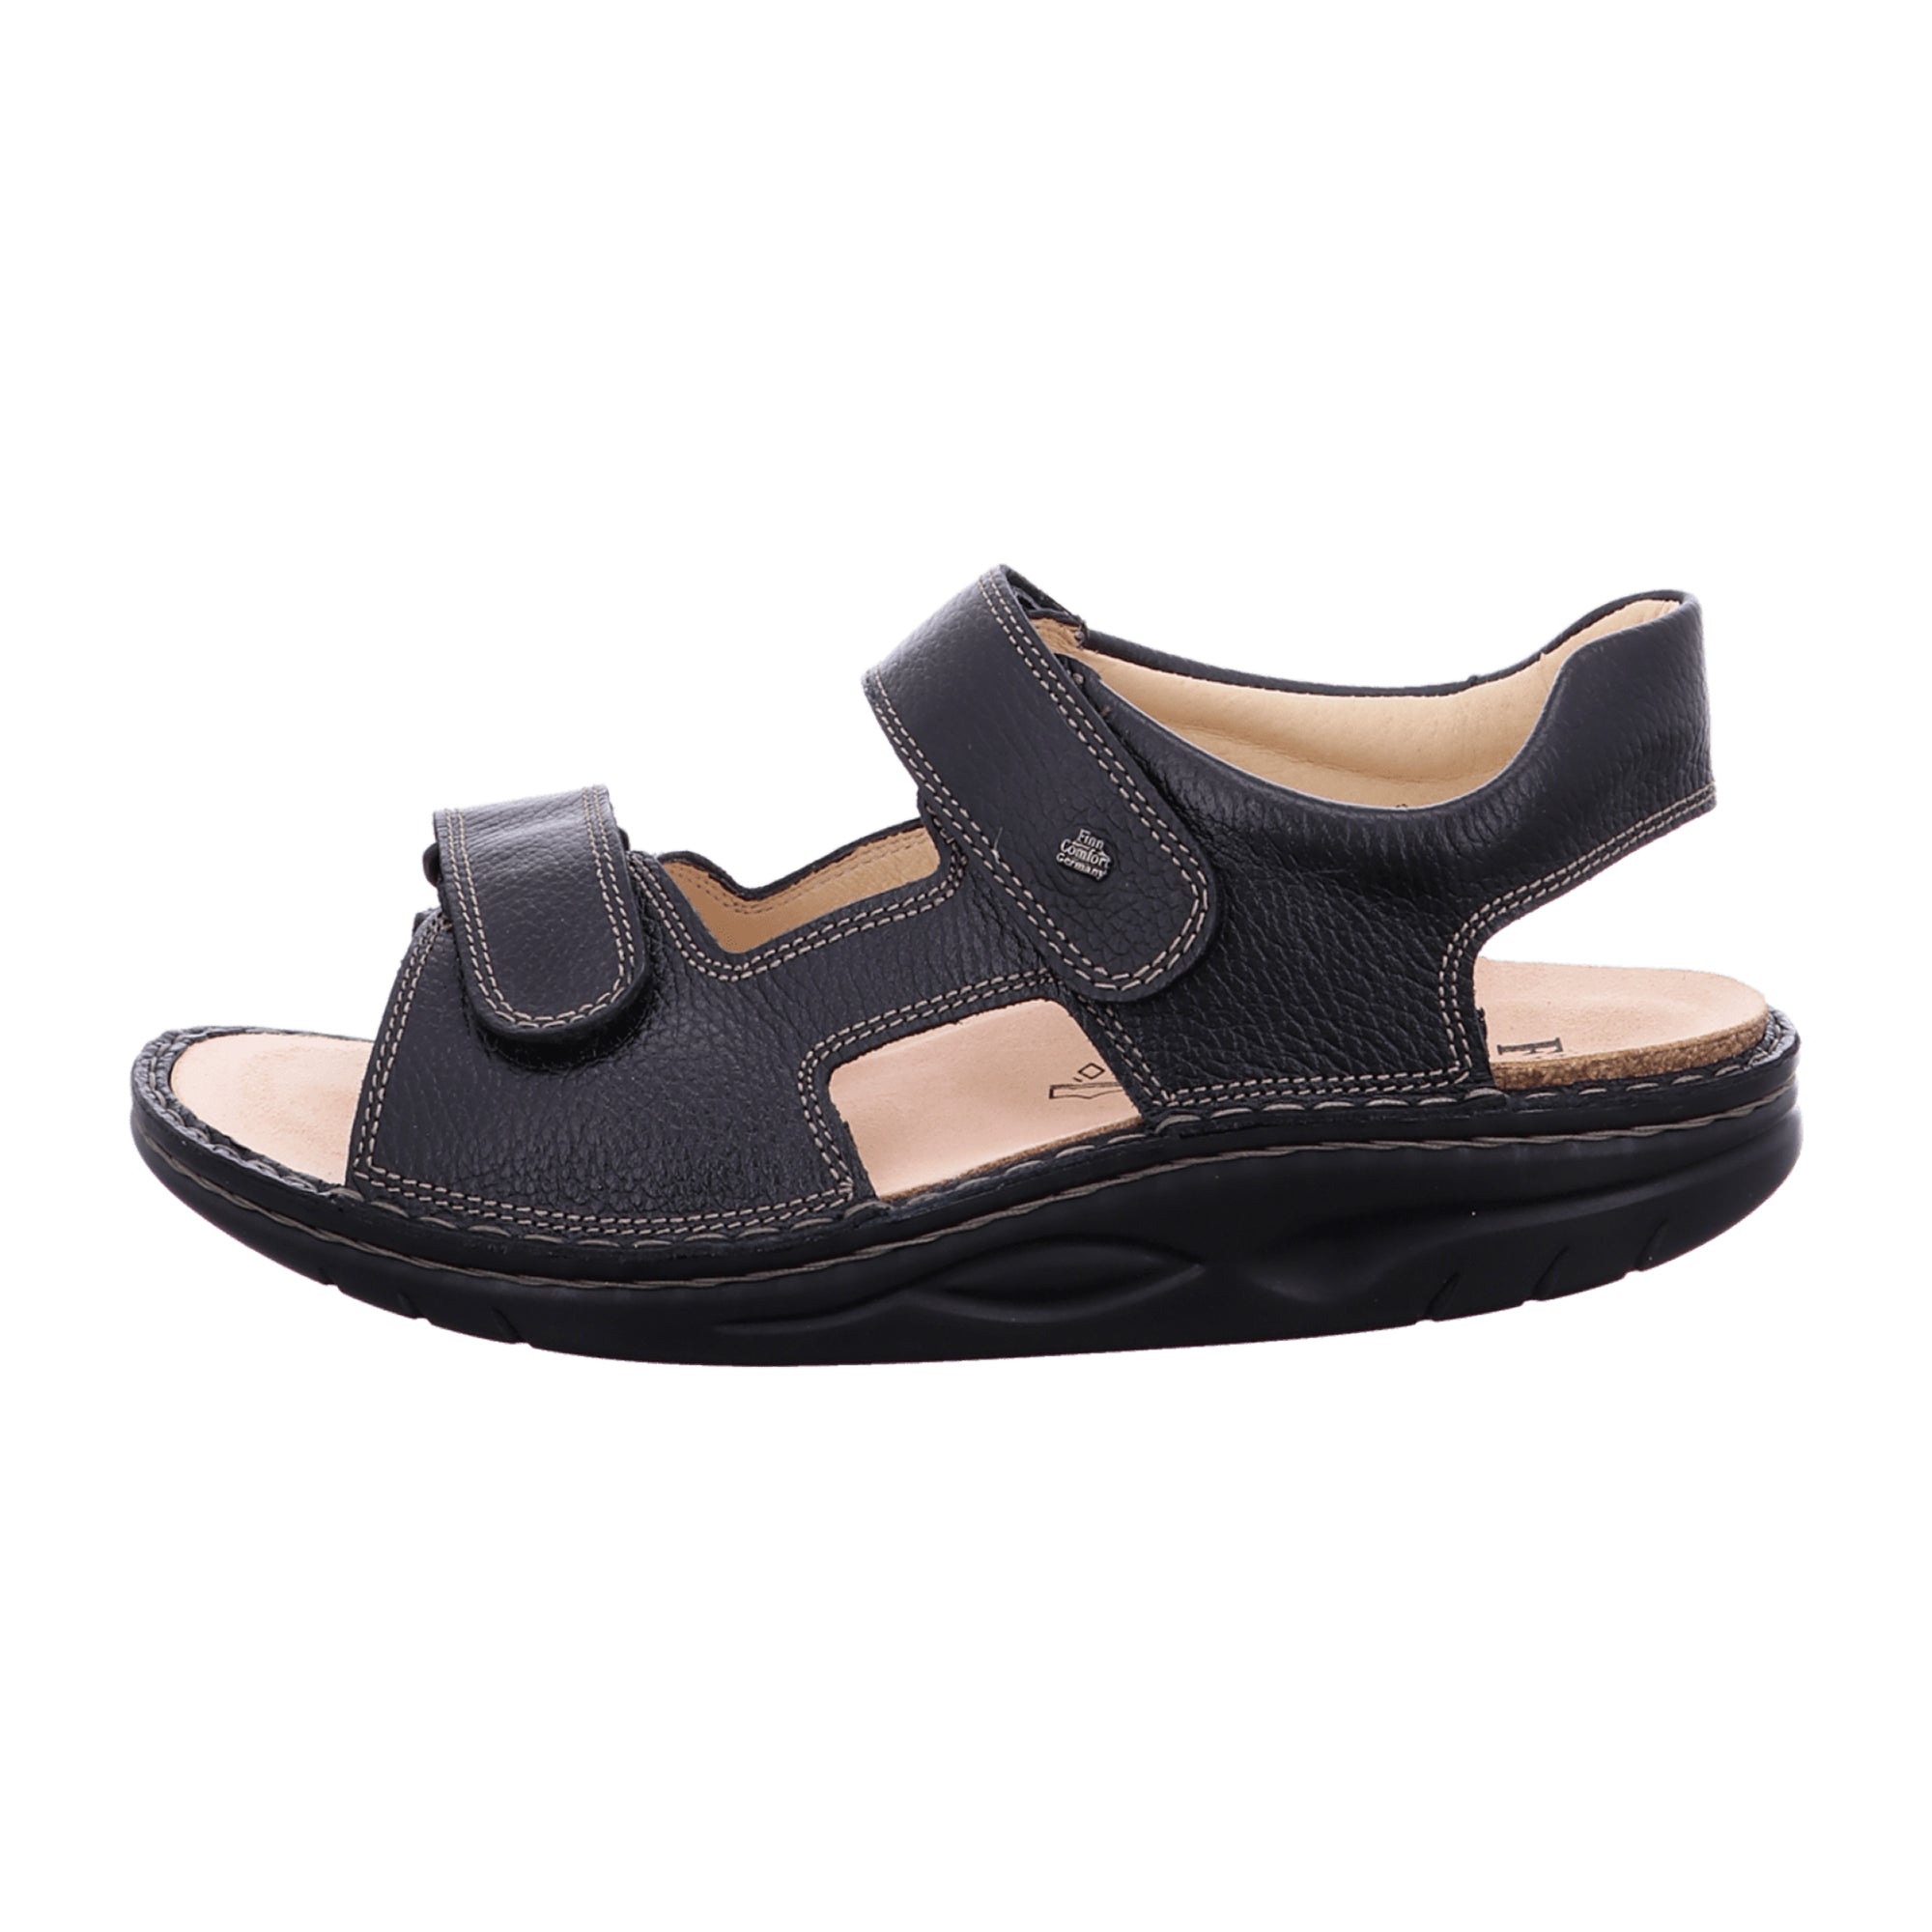 Finn Comfort Perm Men's Black Comfort Shoes – Stylish & Durable